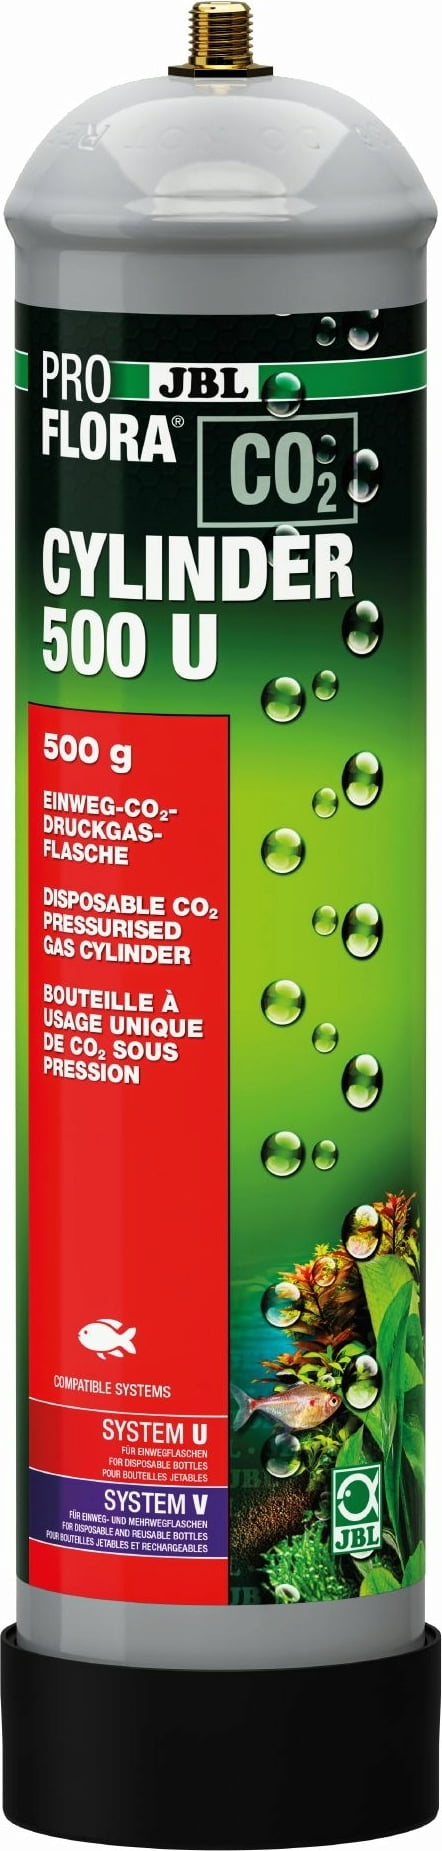 ProFlora u500 - CO₂ usage unique